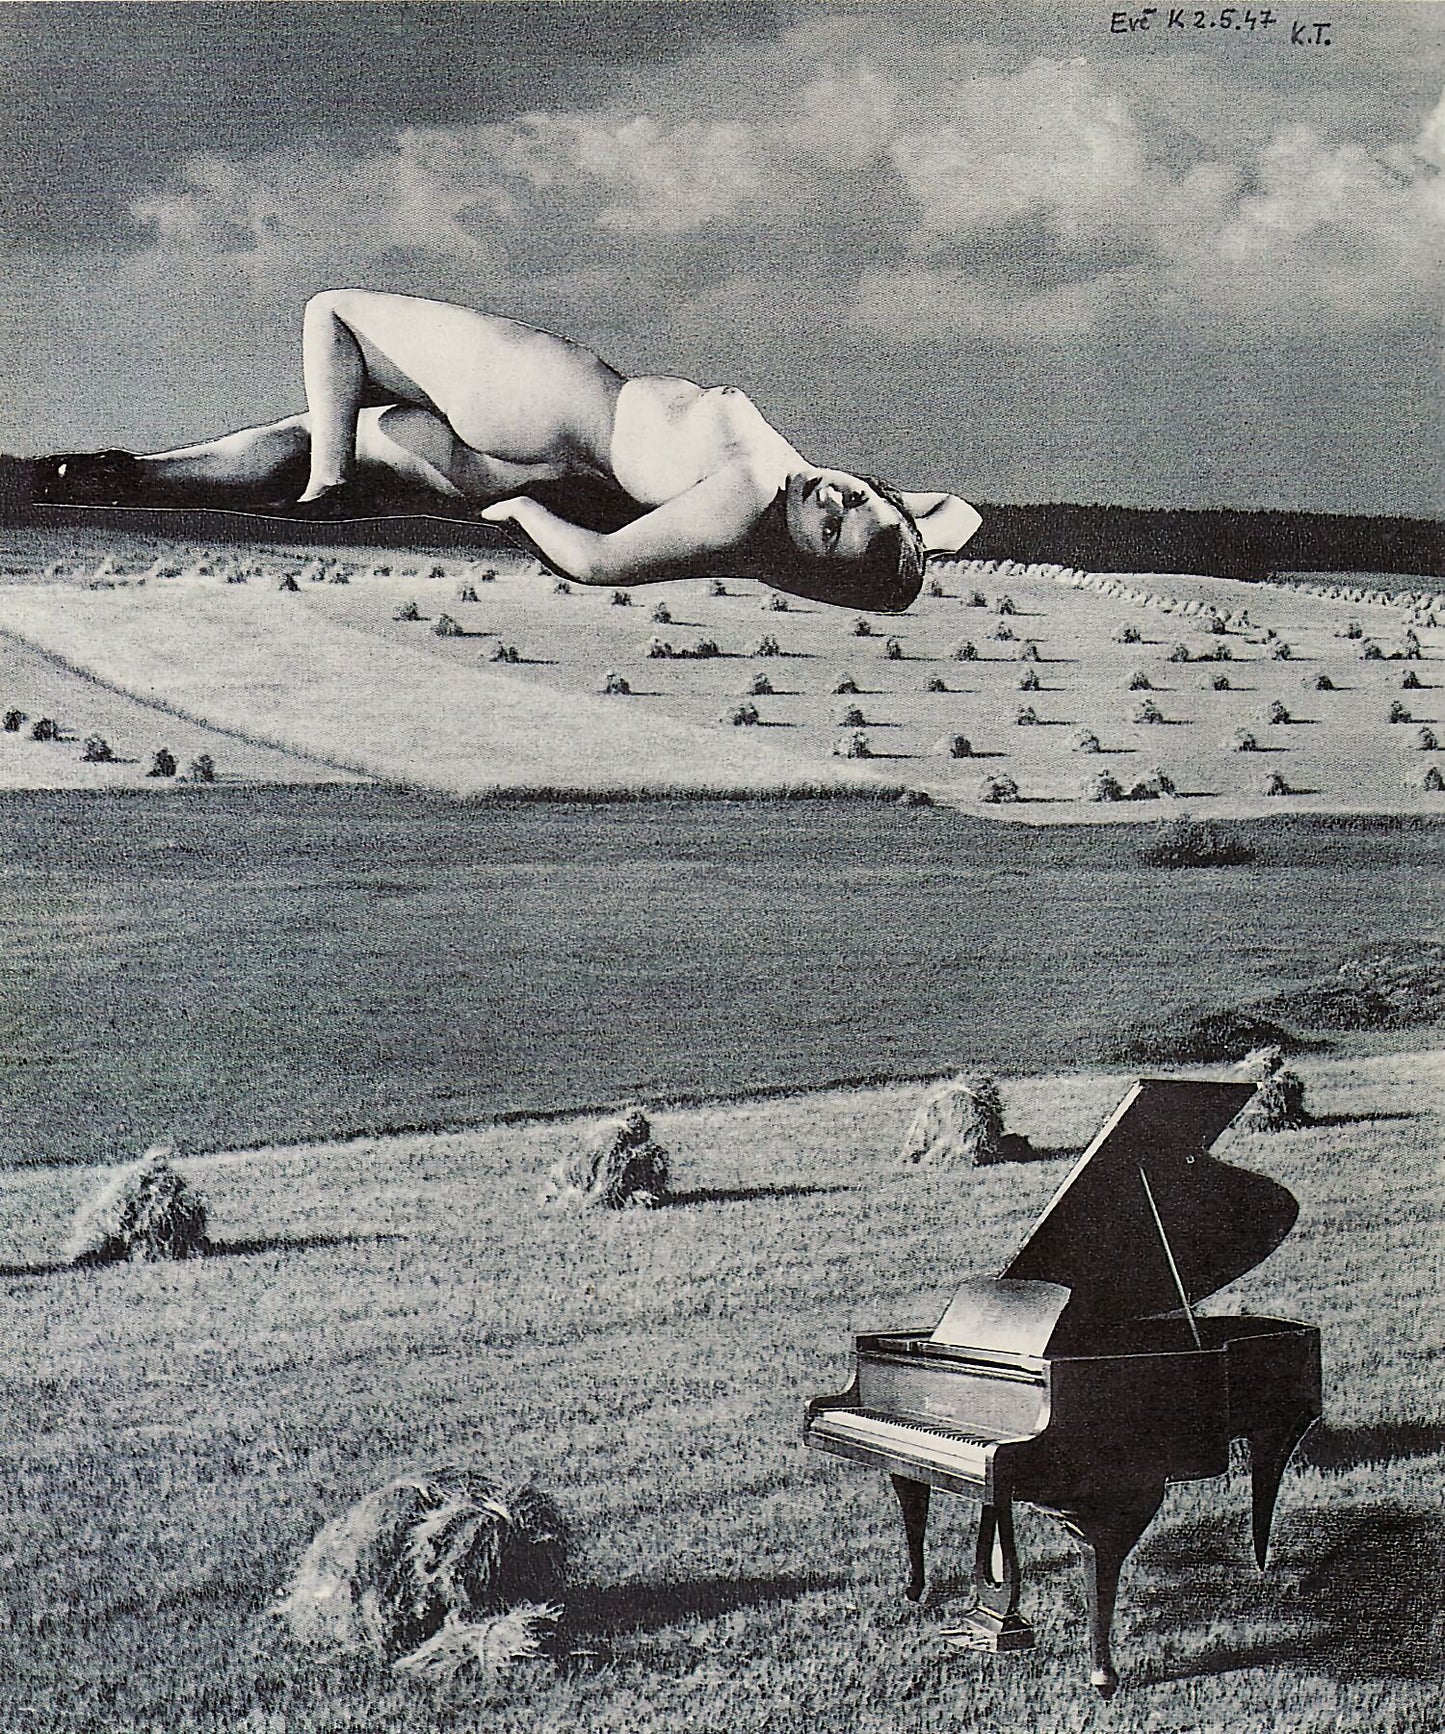  Collage 336 by Karel Teige - 1947